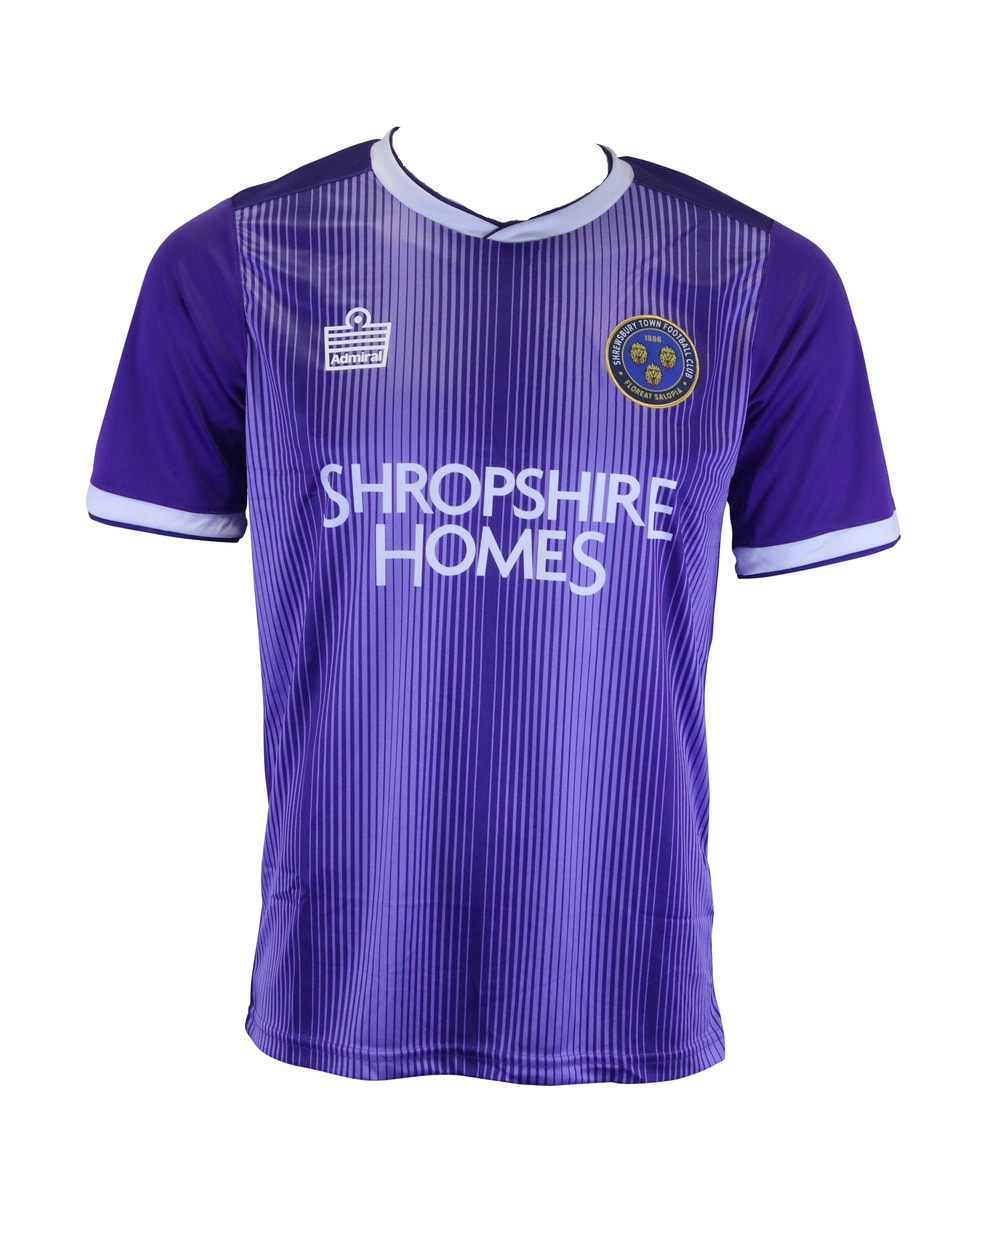 Shrewsbury Town Third 2020/2021 Football Shirt Manufactured By Admiral. The Club Plays Football In League One.